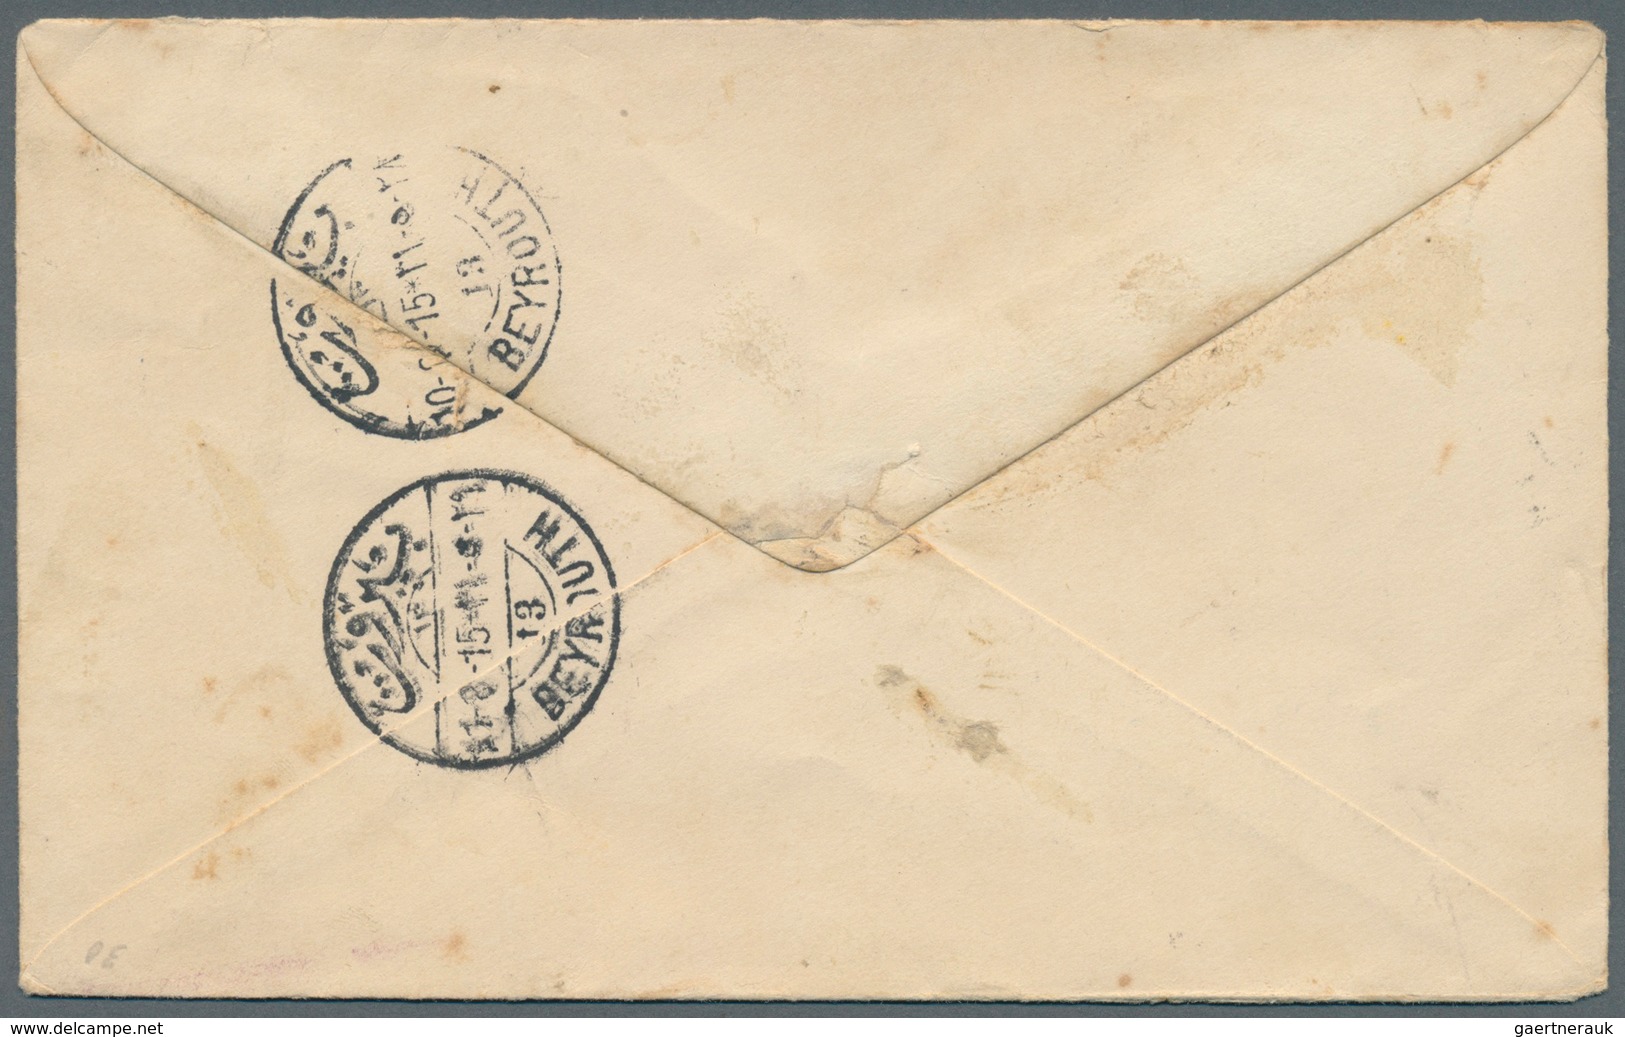 Libanon: 1915, DJUBEIL (LIBAN) (Isfila No.1, RR) On 20 Para Postal Stationery Envelope Used Uprated - Libano